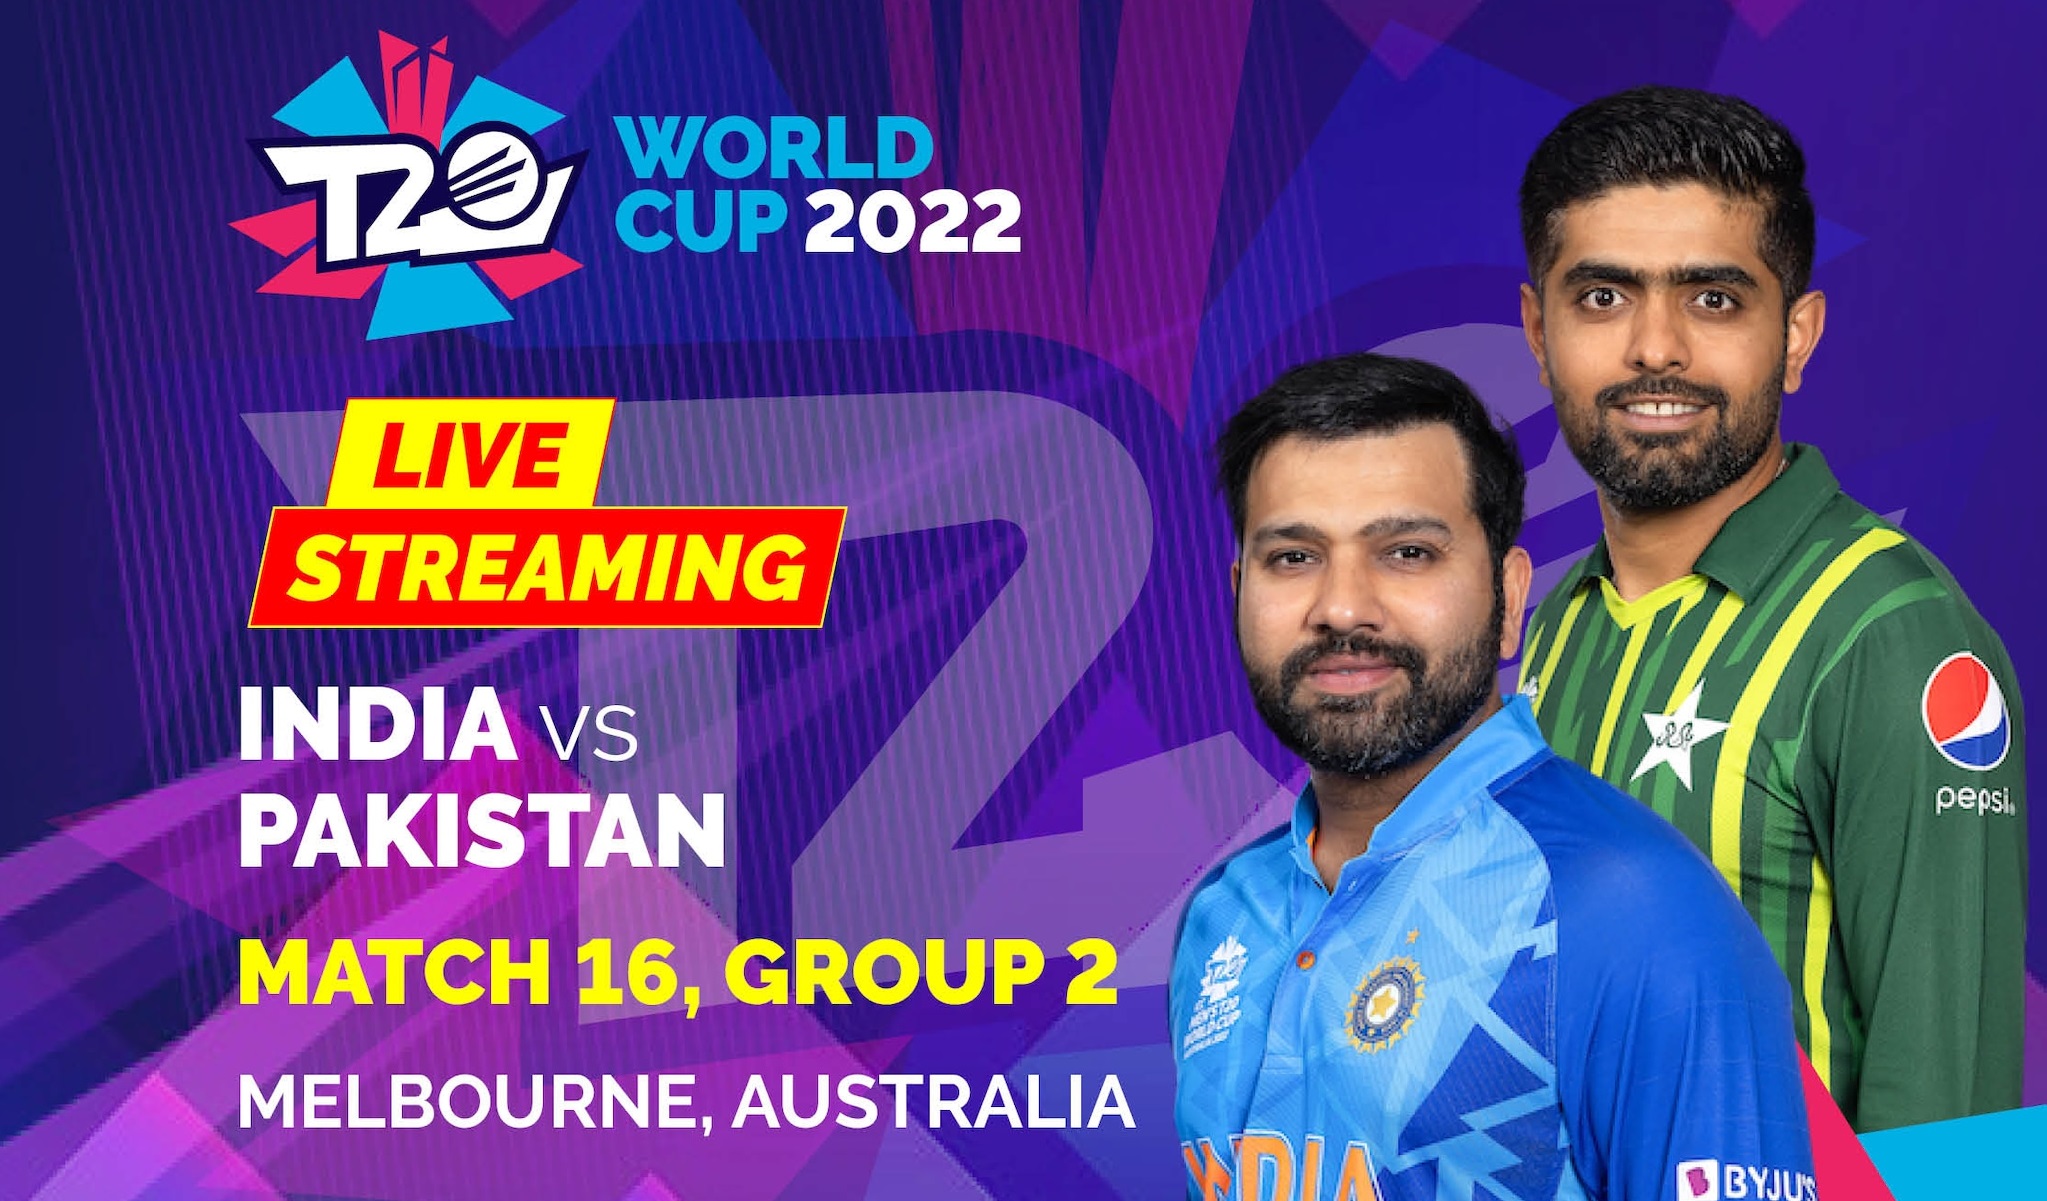 Pakistan vs India live streaming link